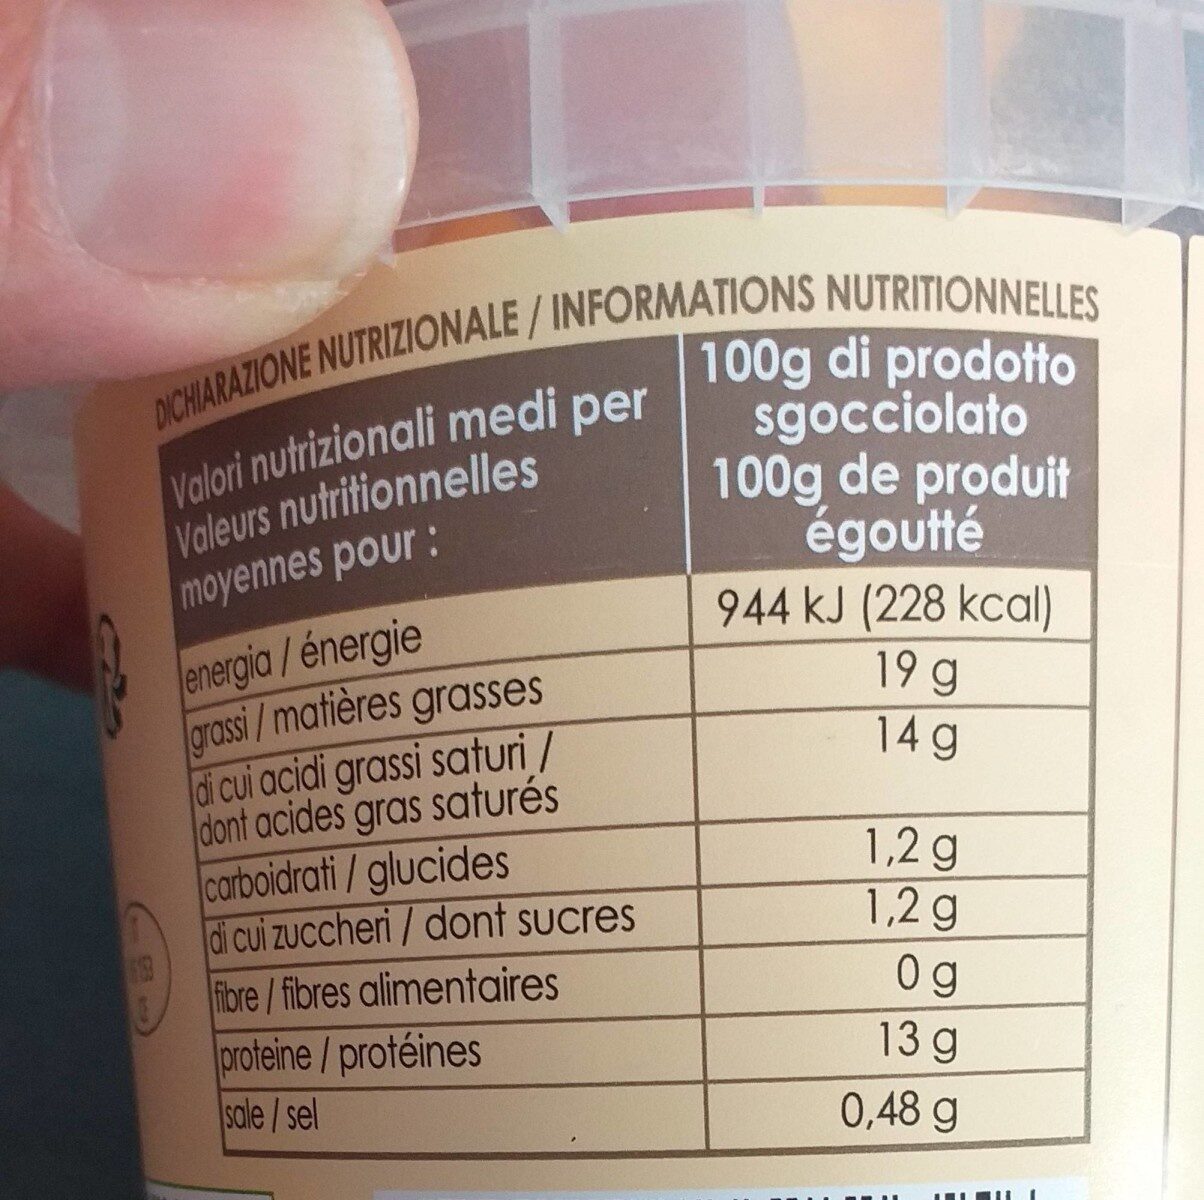 Burrata di puglia di latte vaccino - Voedingswaarden - fr